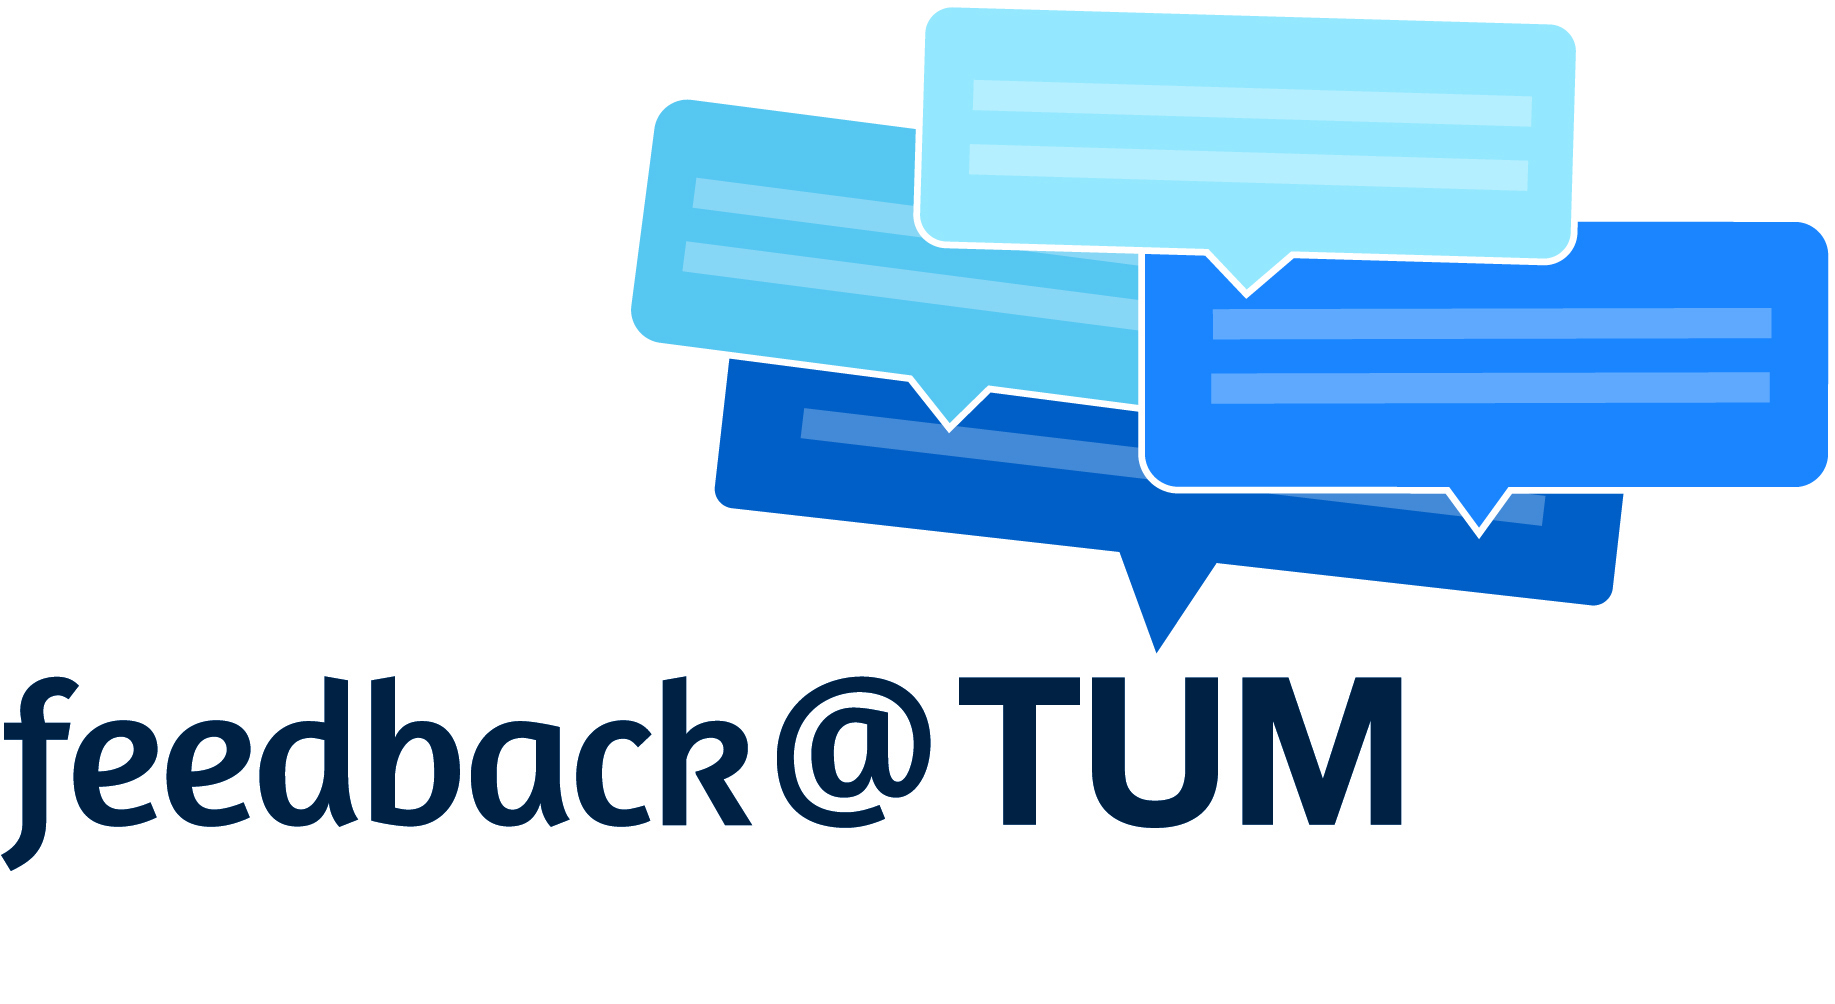 Logo TUM‘s feedback management